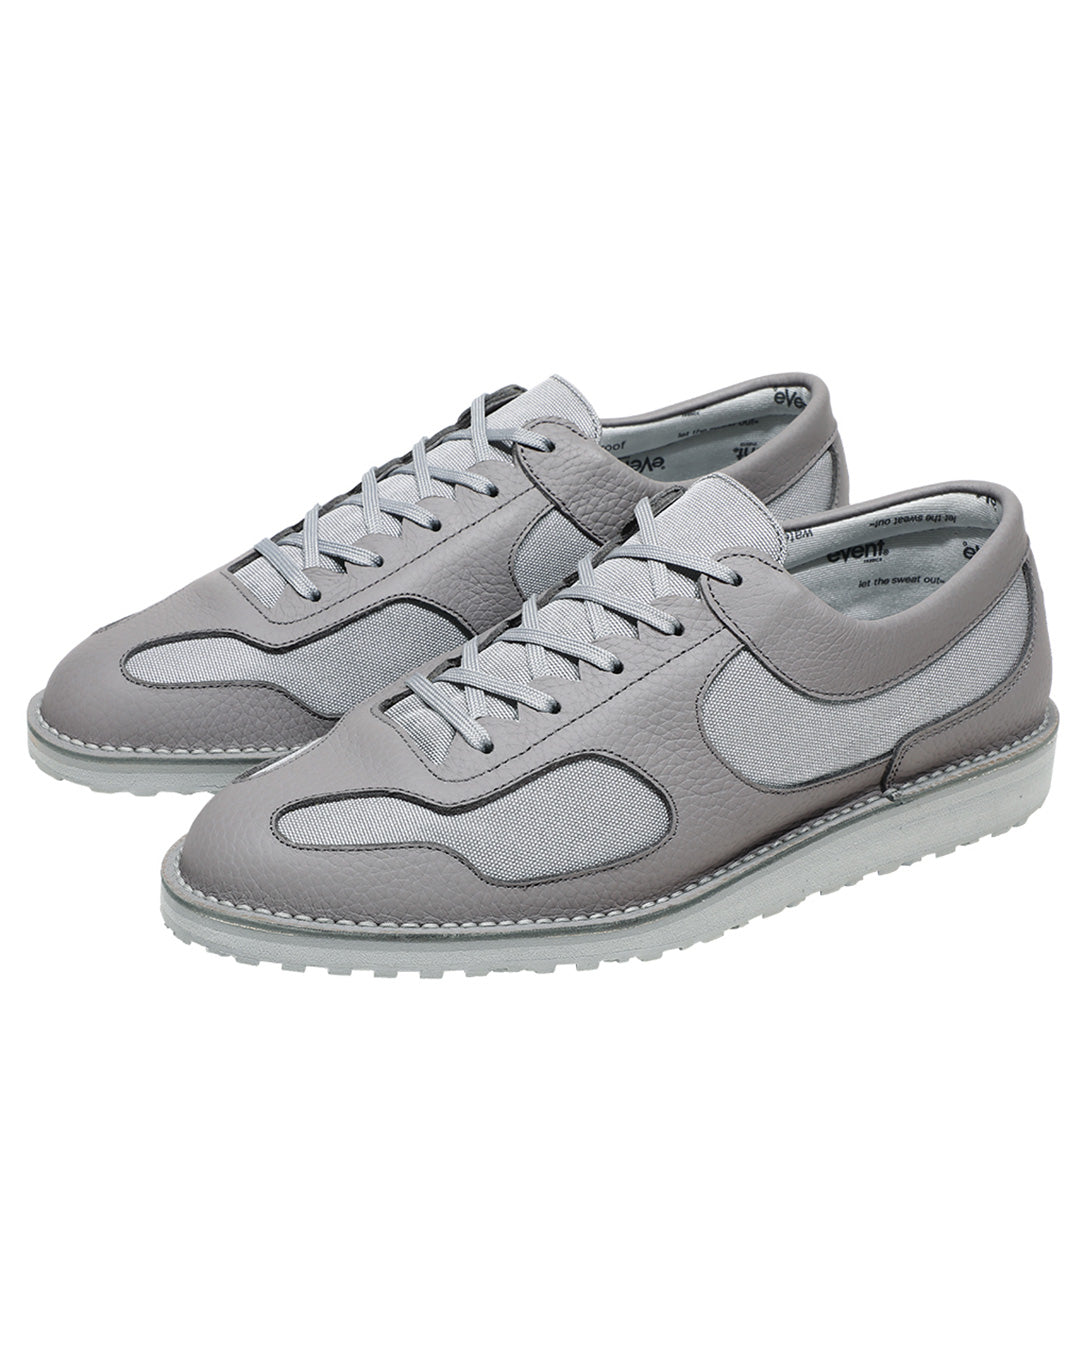 Cav Shoes #1 gray